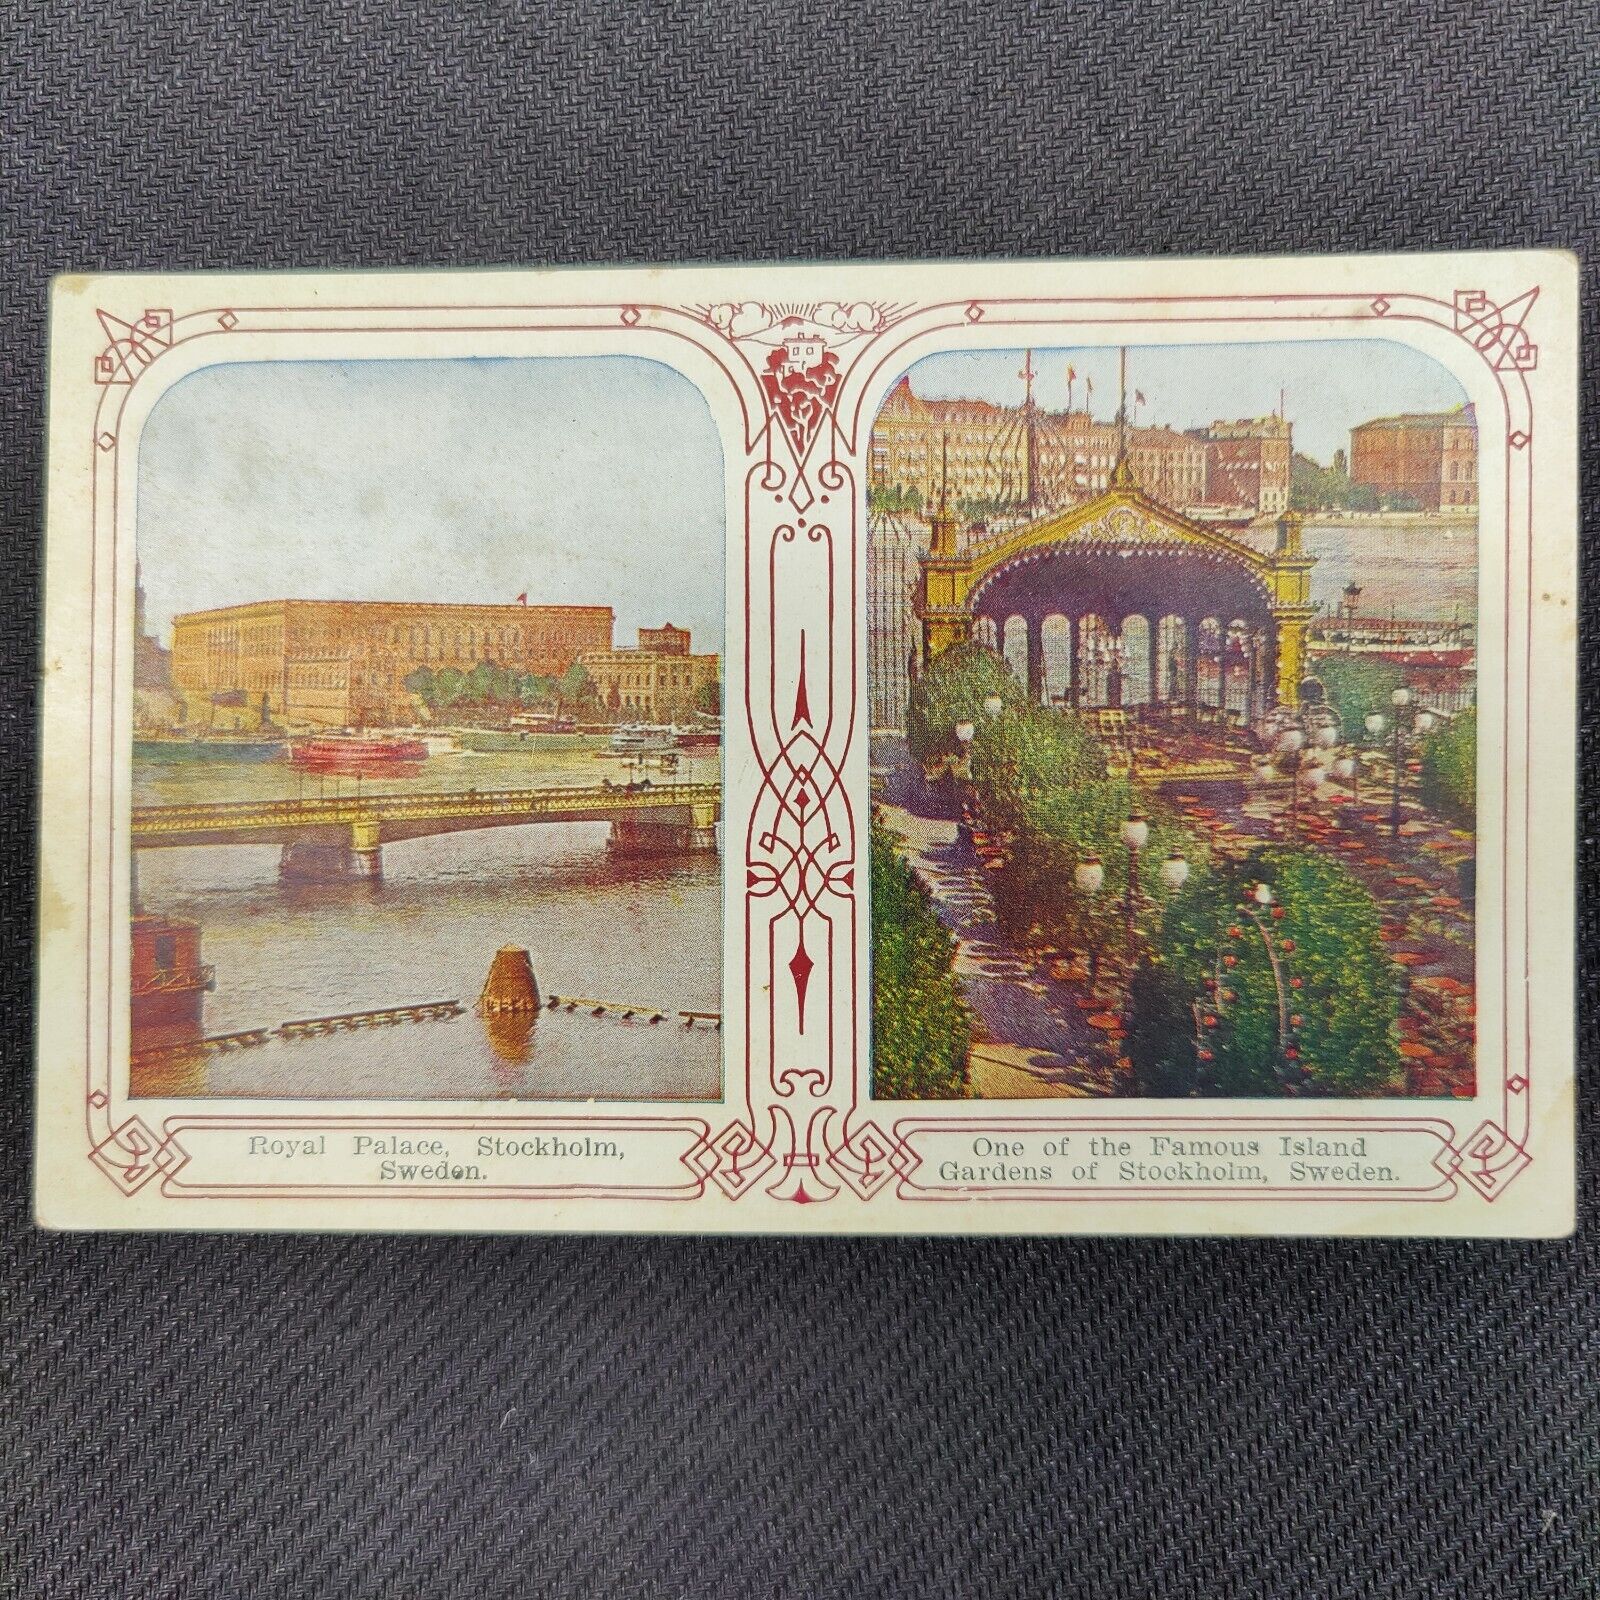 RARE Atq c. 1920s World Postcard STOCKHOLM SWEDEN ROYAL PALACE + ISLAND GARDENS